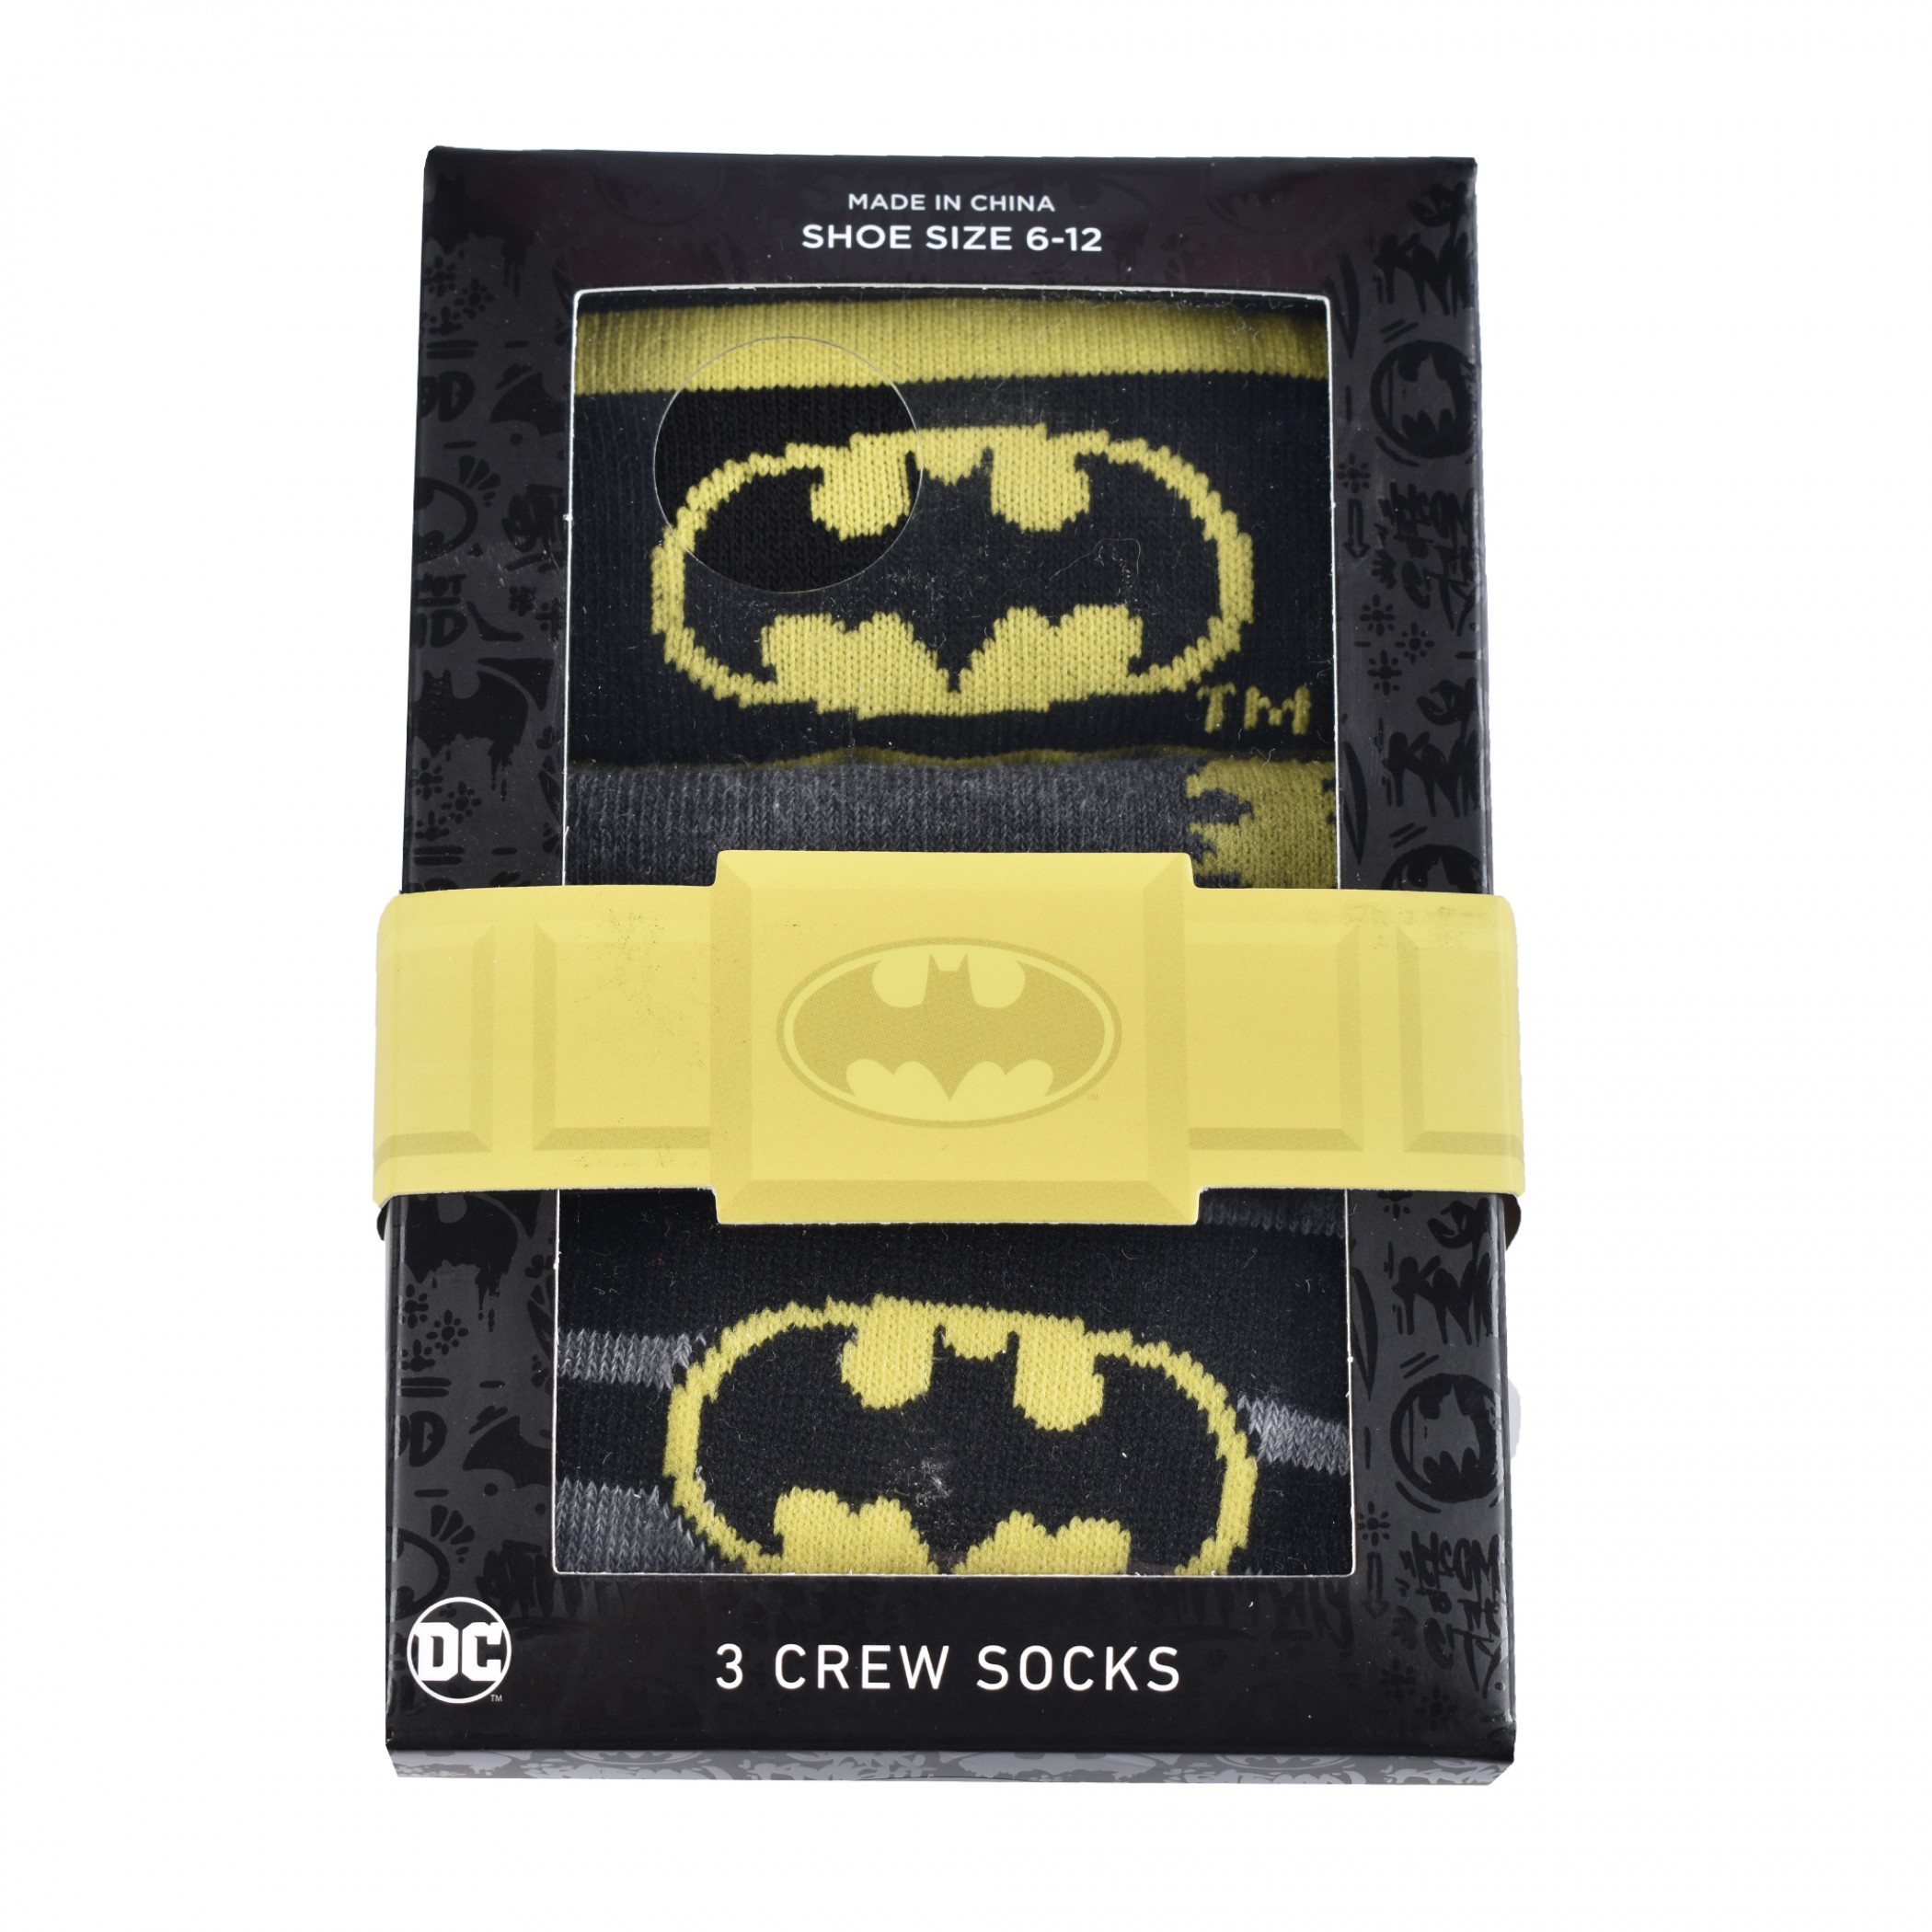 Batman Icons Crew Socks Boxed Set of 3 Pairs